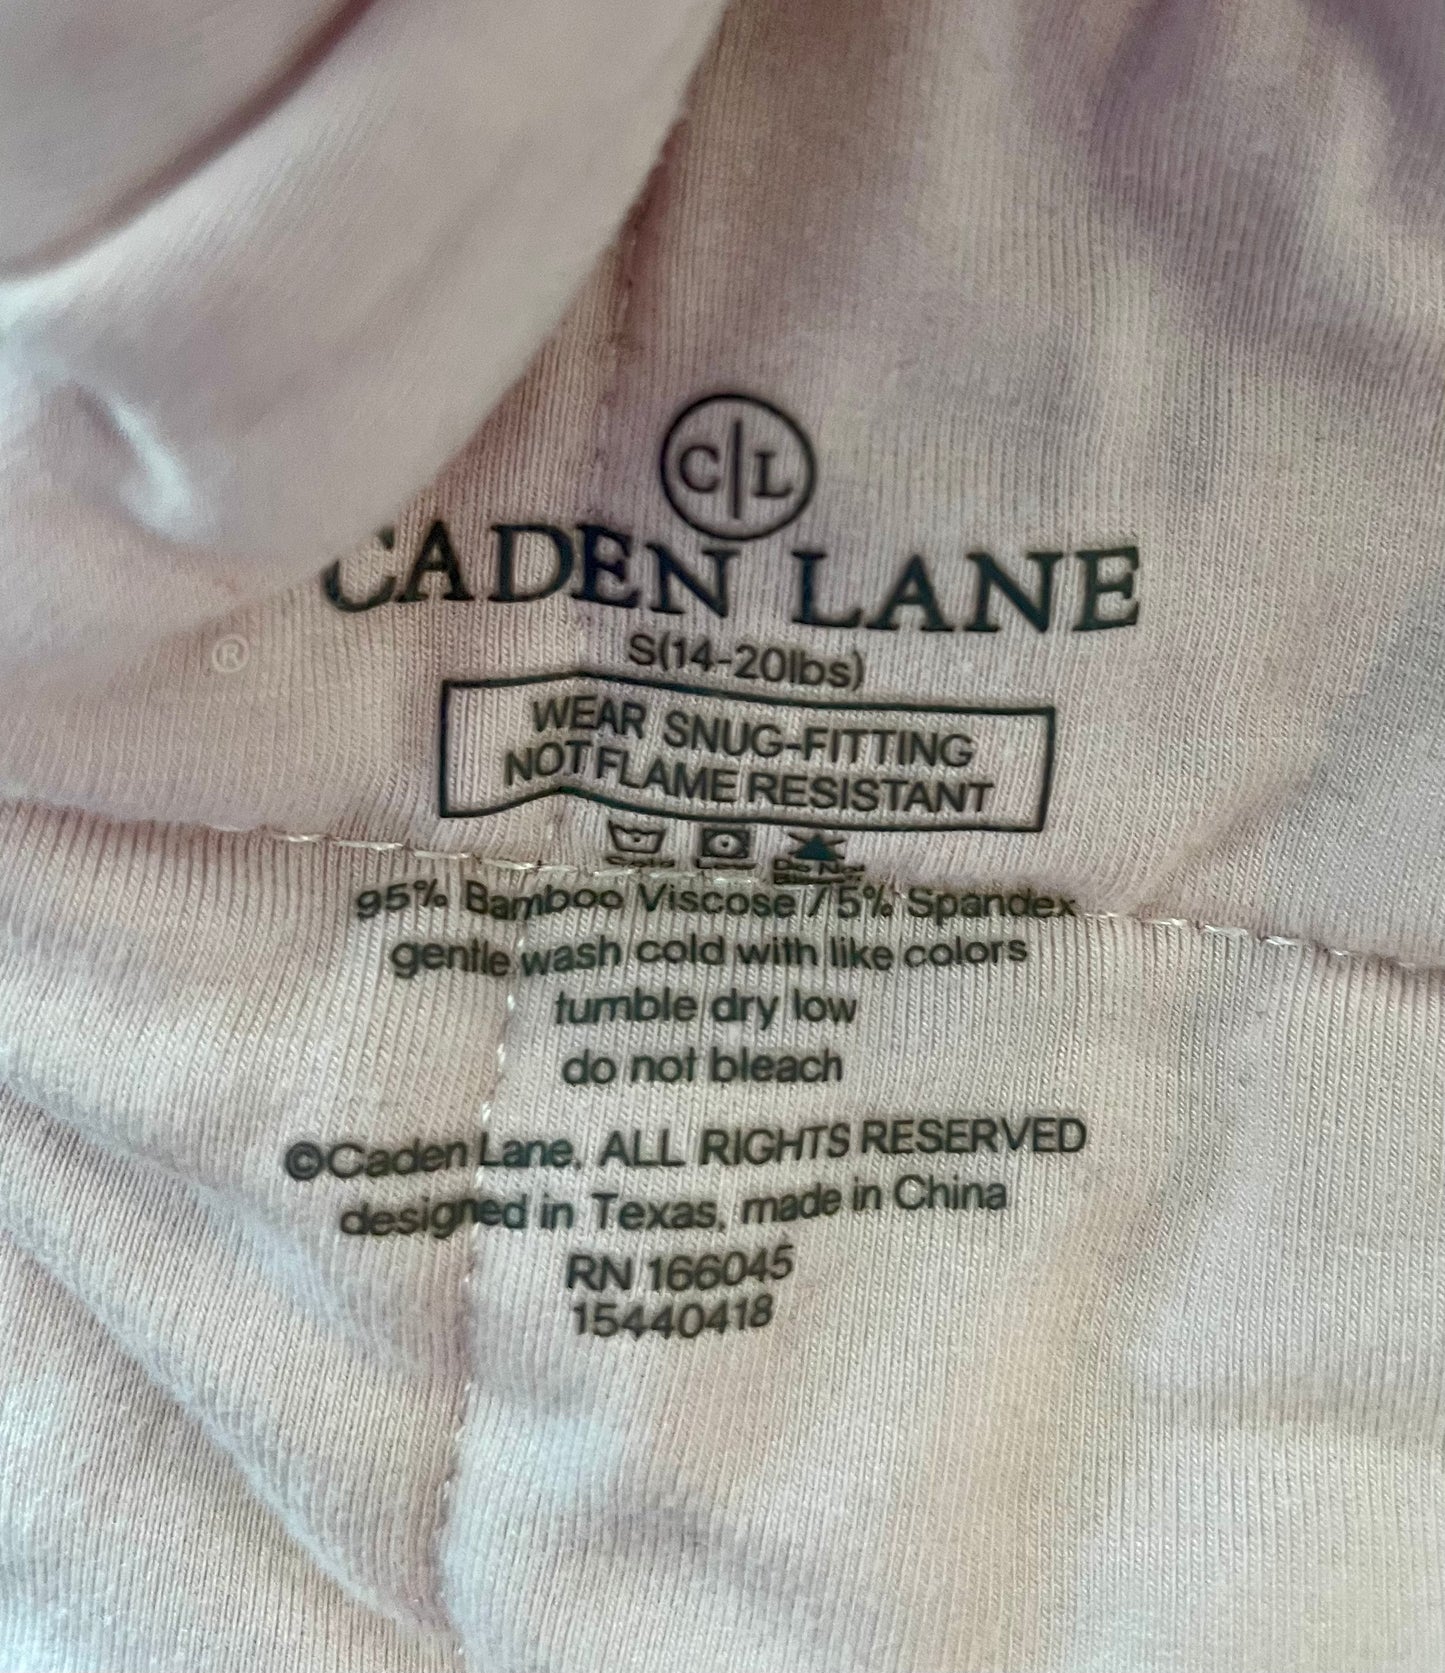 Caden Lane pink sleep sack size small (14-20lb)